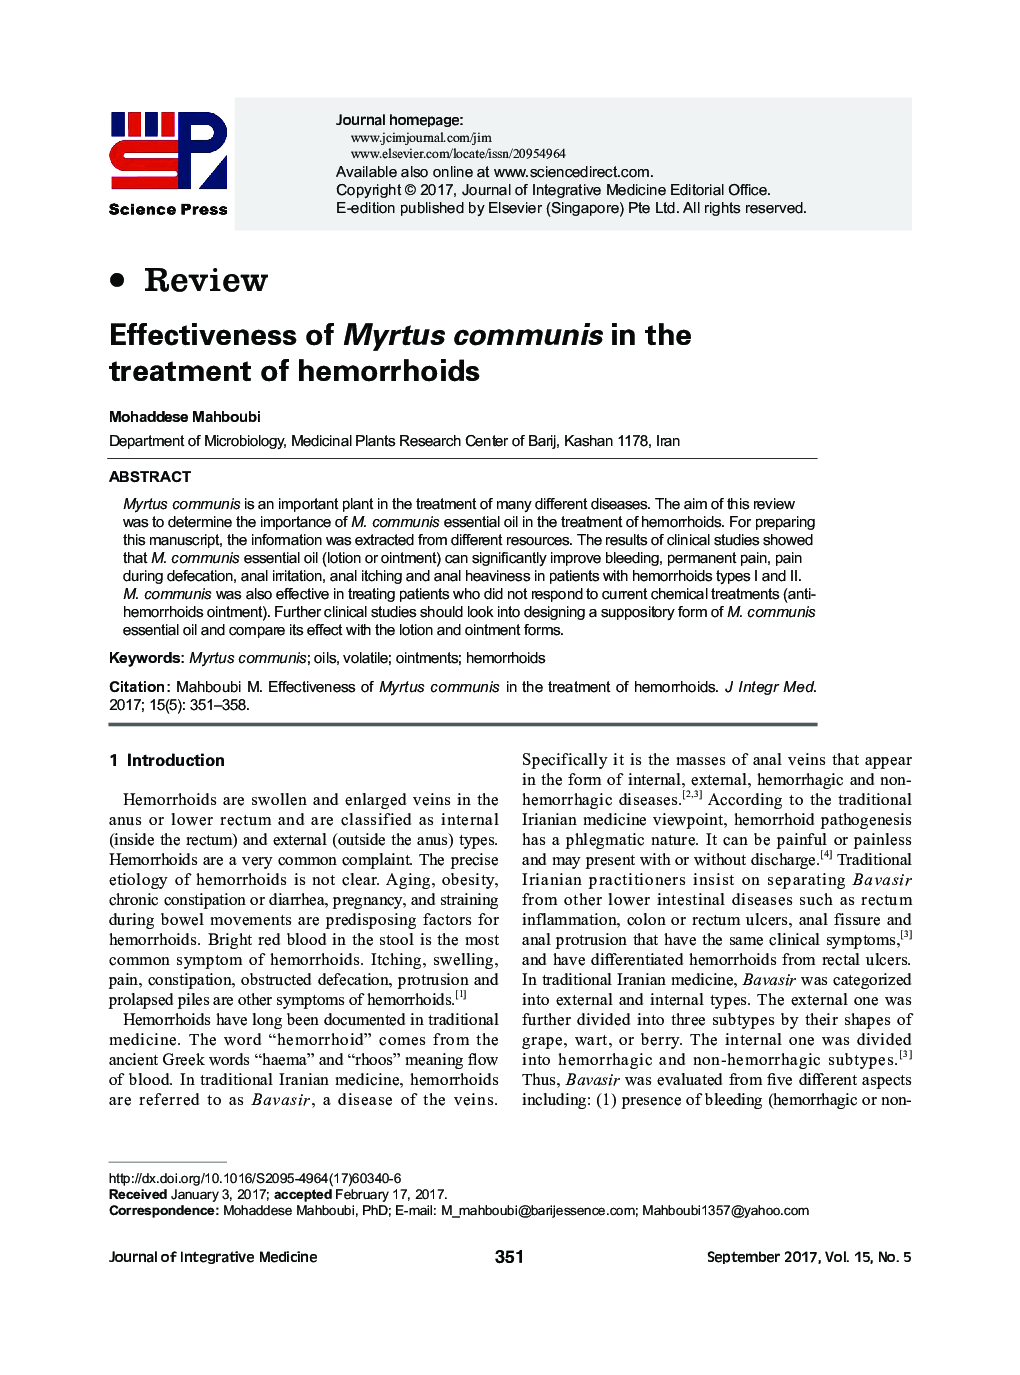 Effectiveness of Myrtus communis in the treatment of hemorrhoids